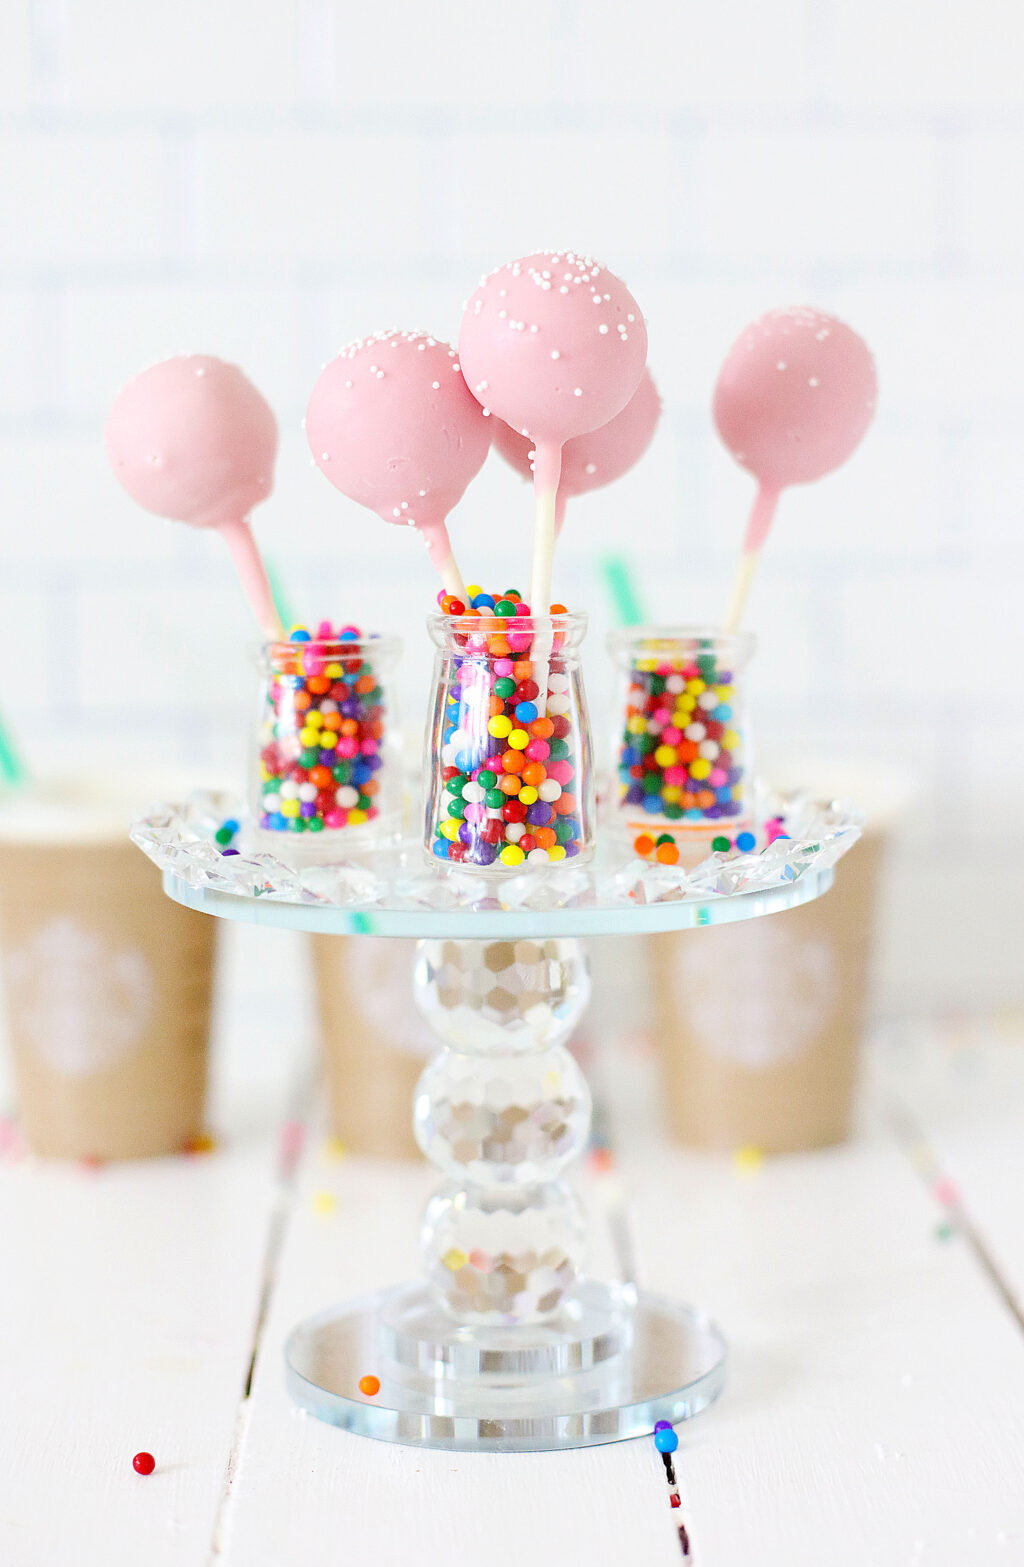 Copycat Starbucks Birthday Cake Pops in a glass jar filled with rainbow sprinkles